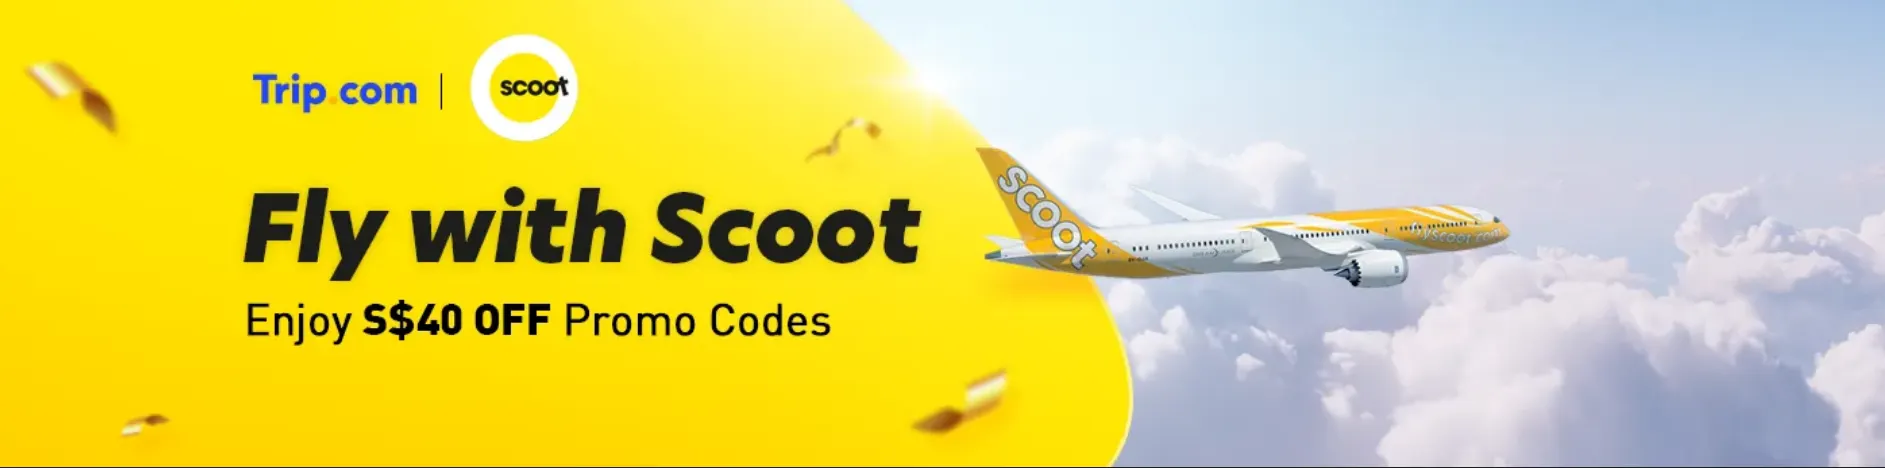 Trip.com Promo Code Singapore: Fly with Scoot